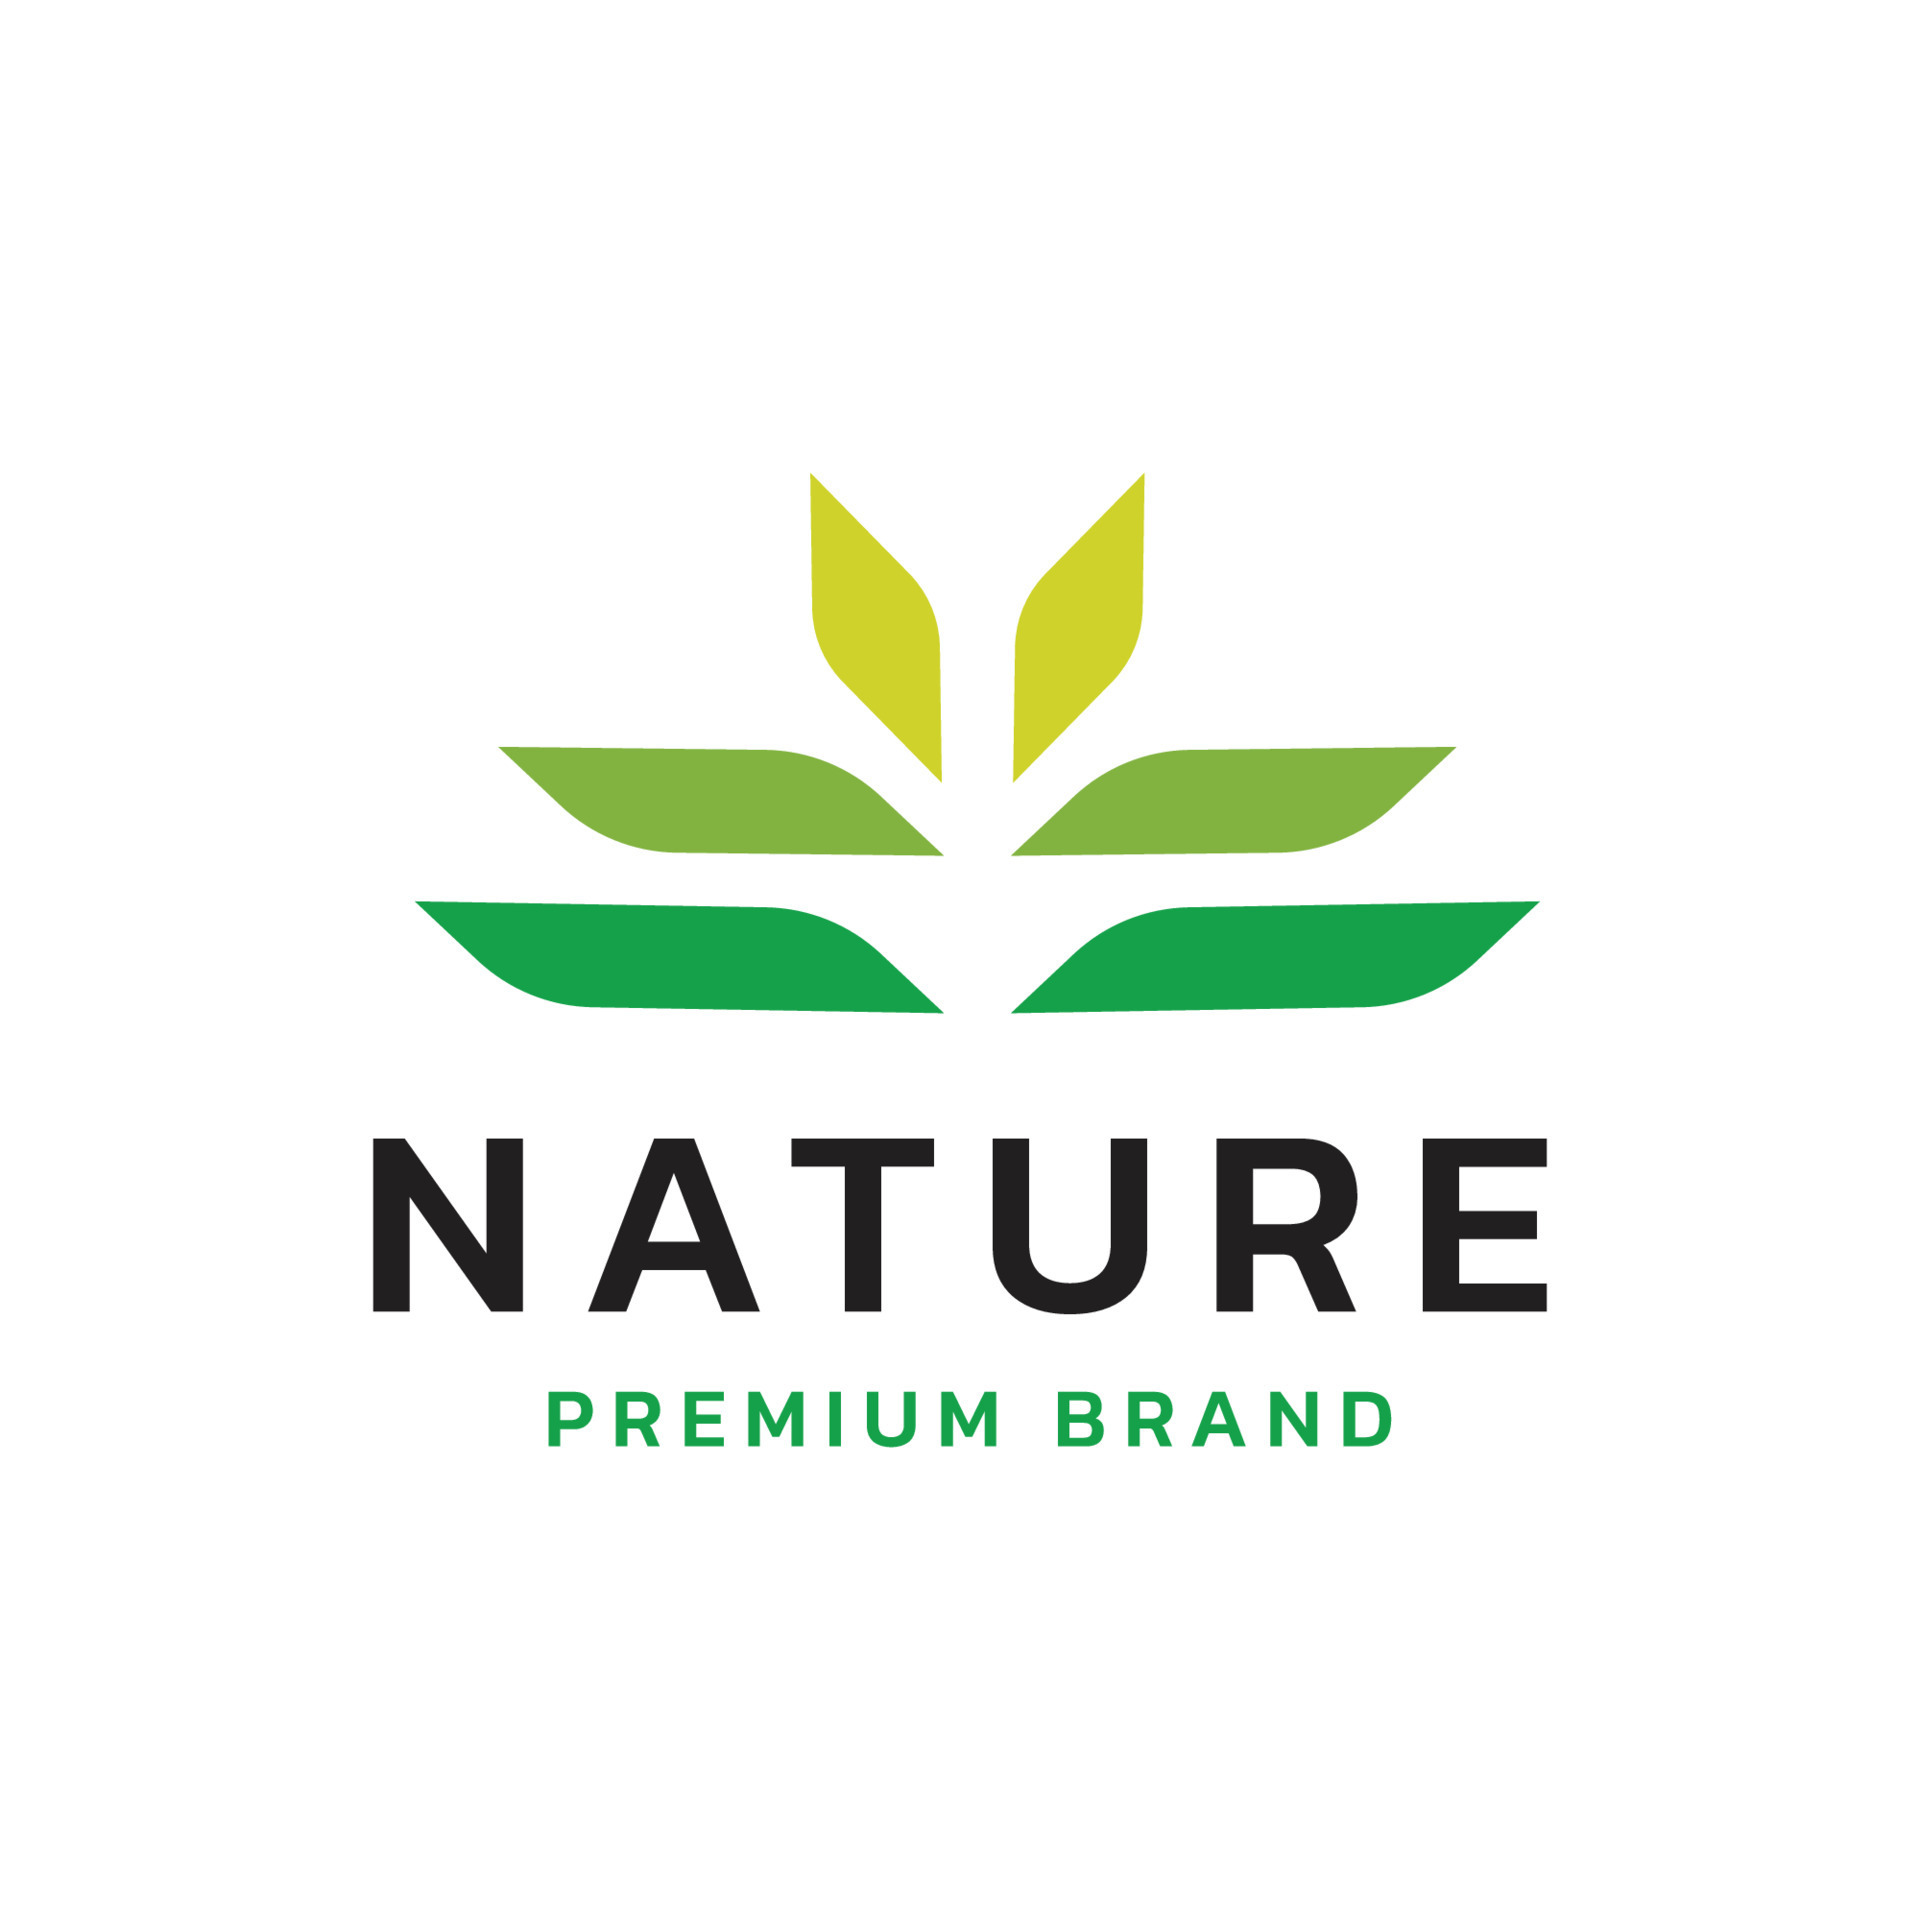 Nature leaf logo arranged with a minimalist concept 7357974 Vector Art ...